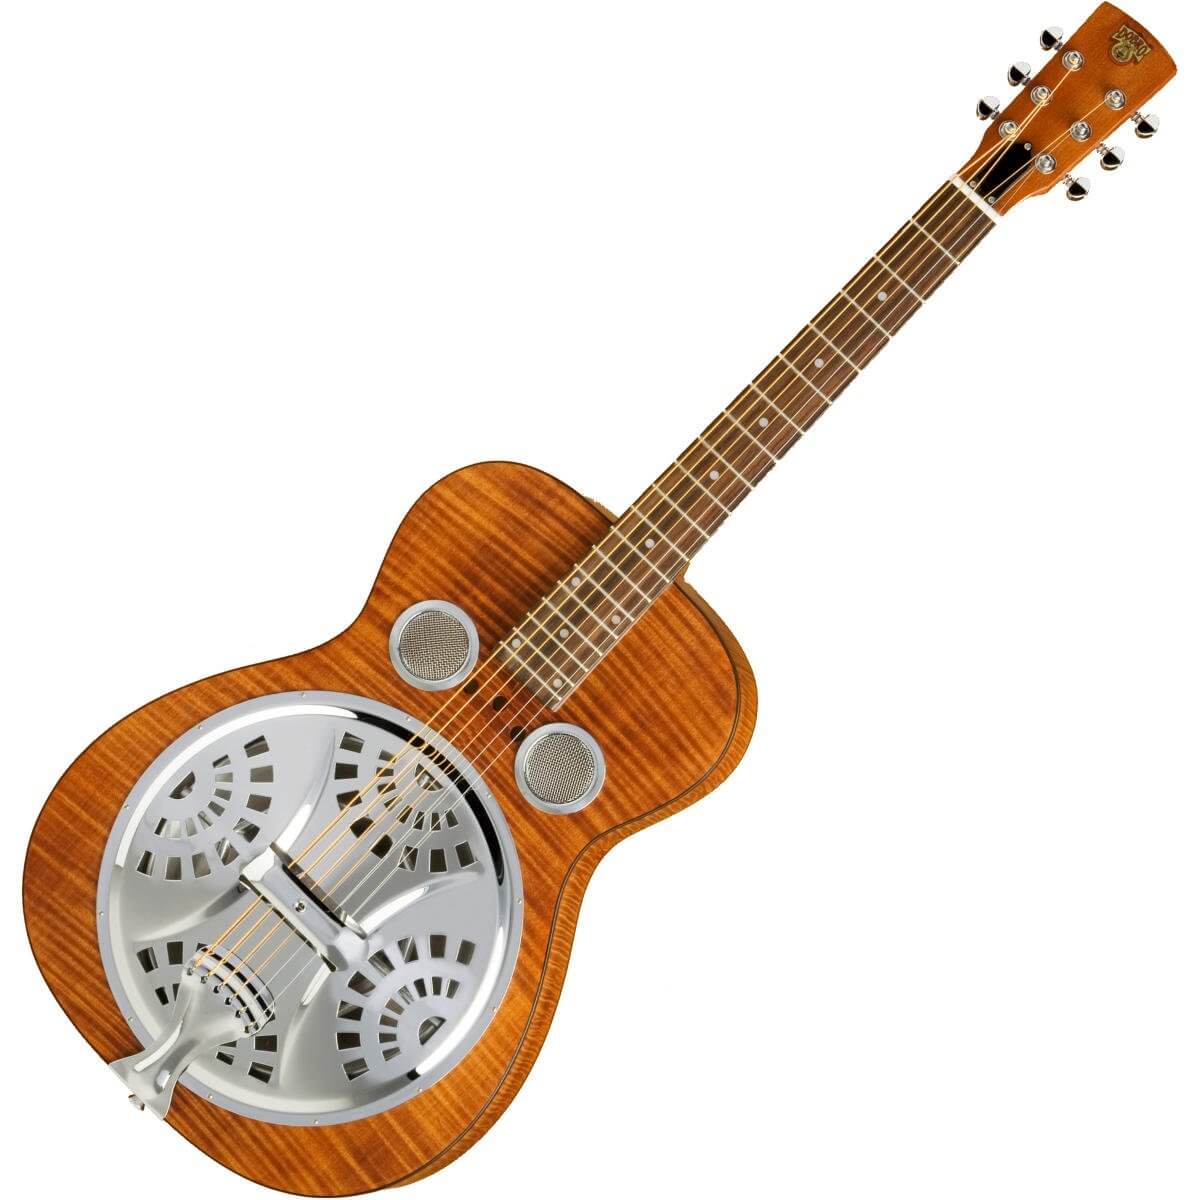 Dobro as a Folk Music Main Instrument